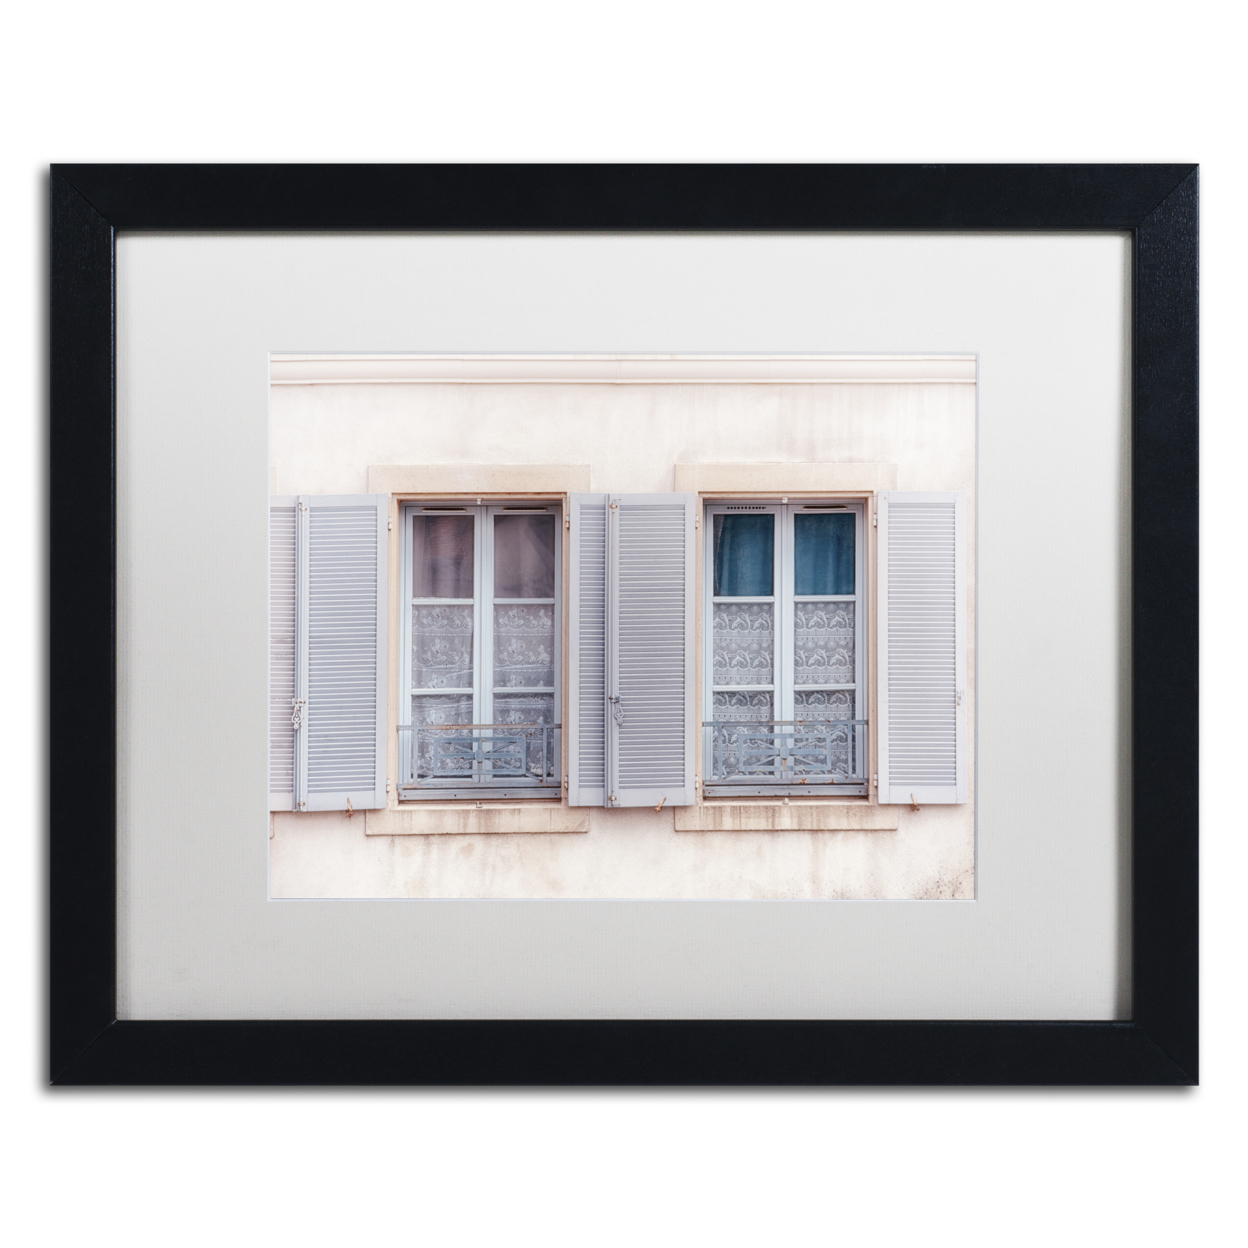 Cora Niele 'French Windows II' Black Wooden Framed Art 18 X 22 Inches